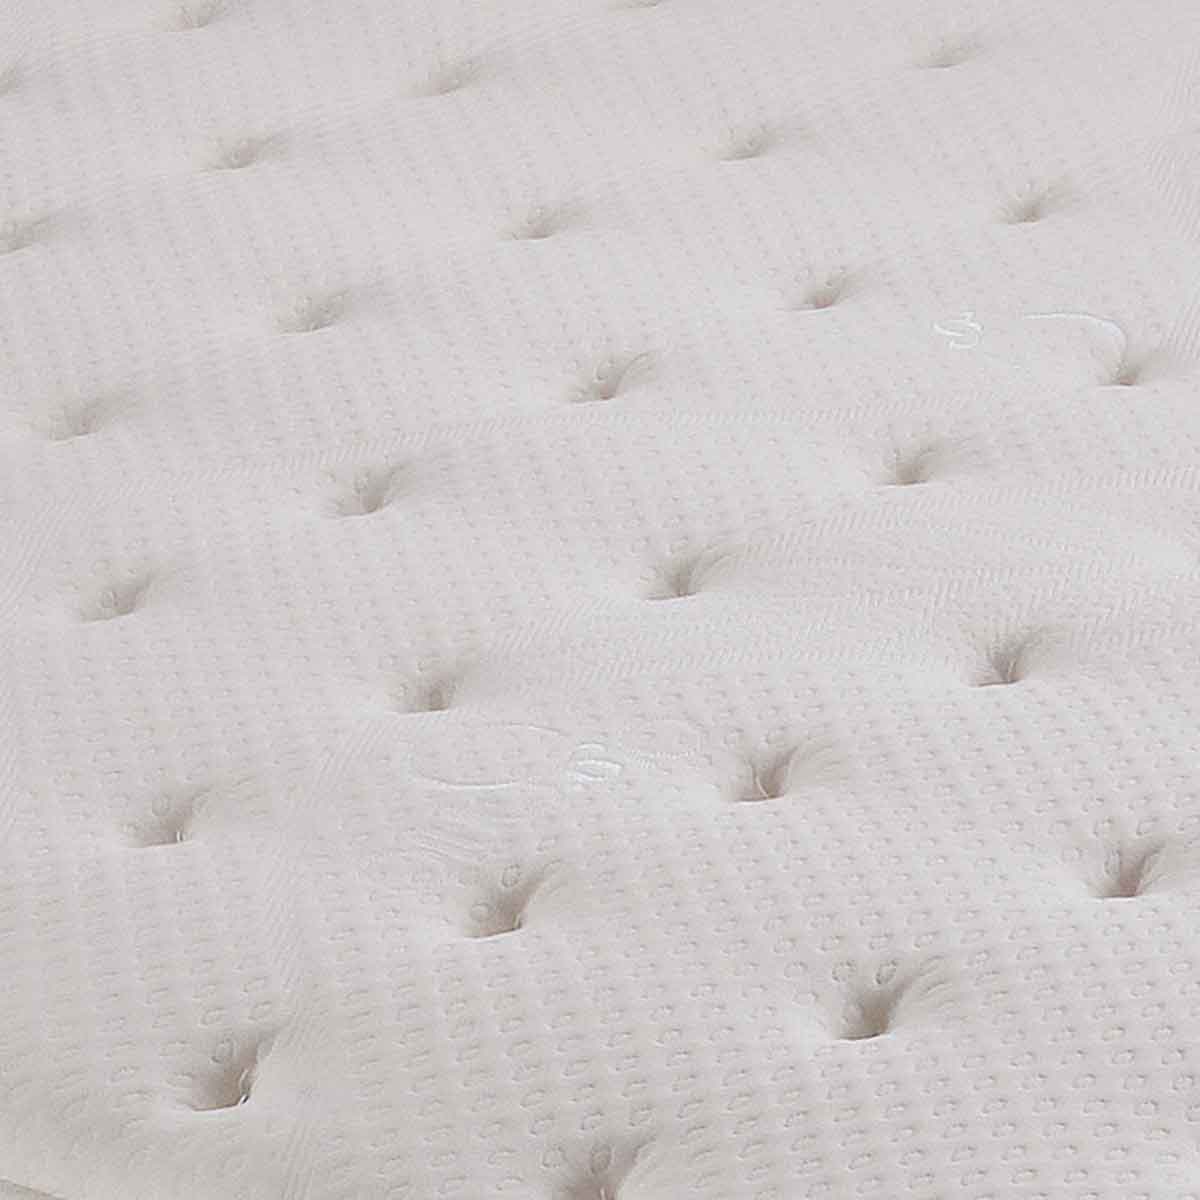 Colchón climatizado de muelle ensacado + lana y algodón domotex® YUKA